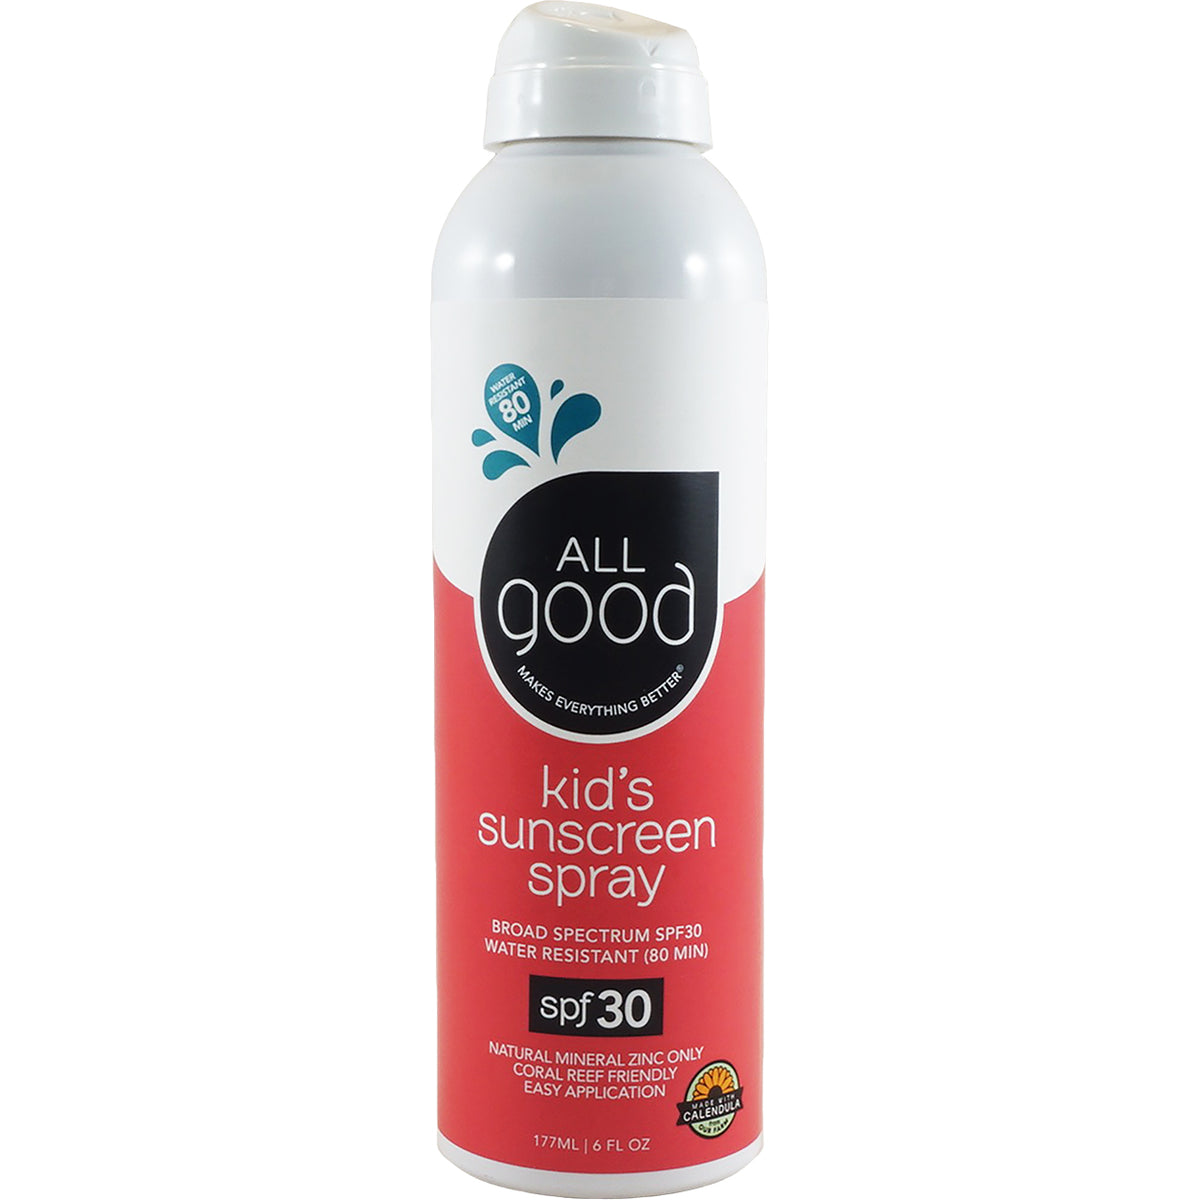 Kids Sunscreen Spray Spf 30 Water Resistant 6 Oz Bottle Allgood Products Sunpoplife